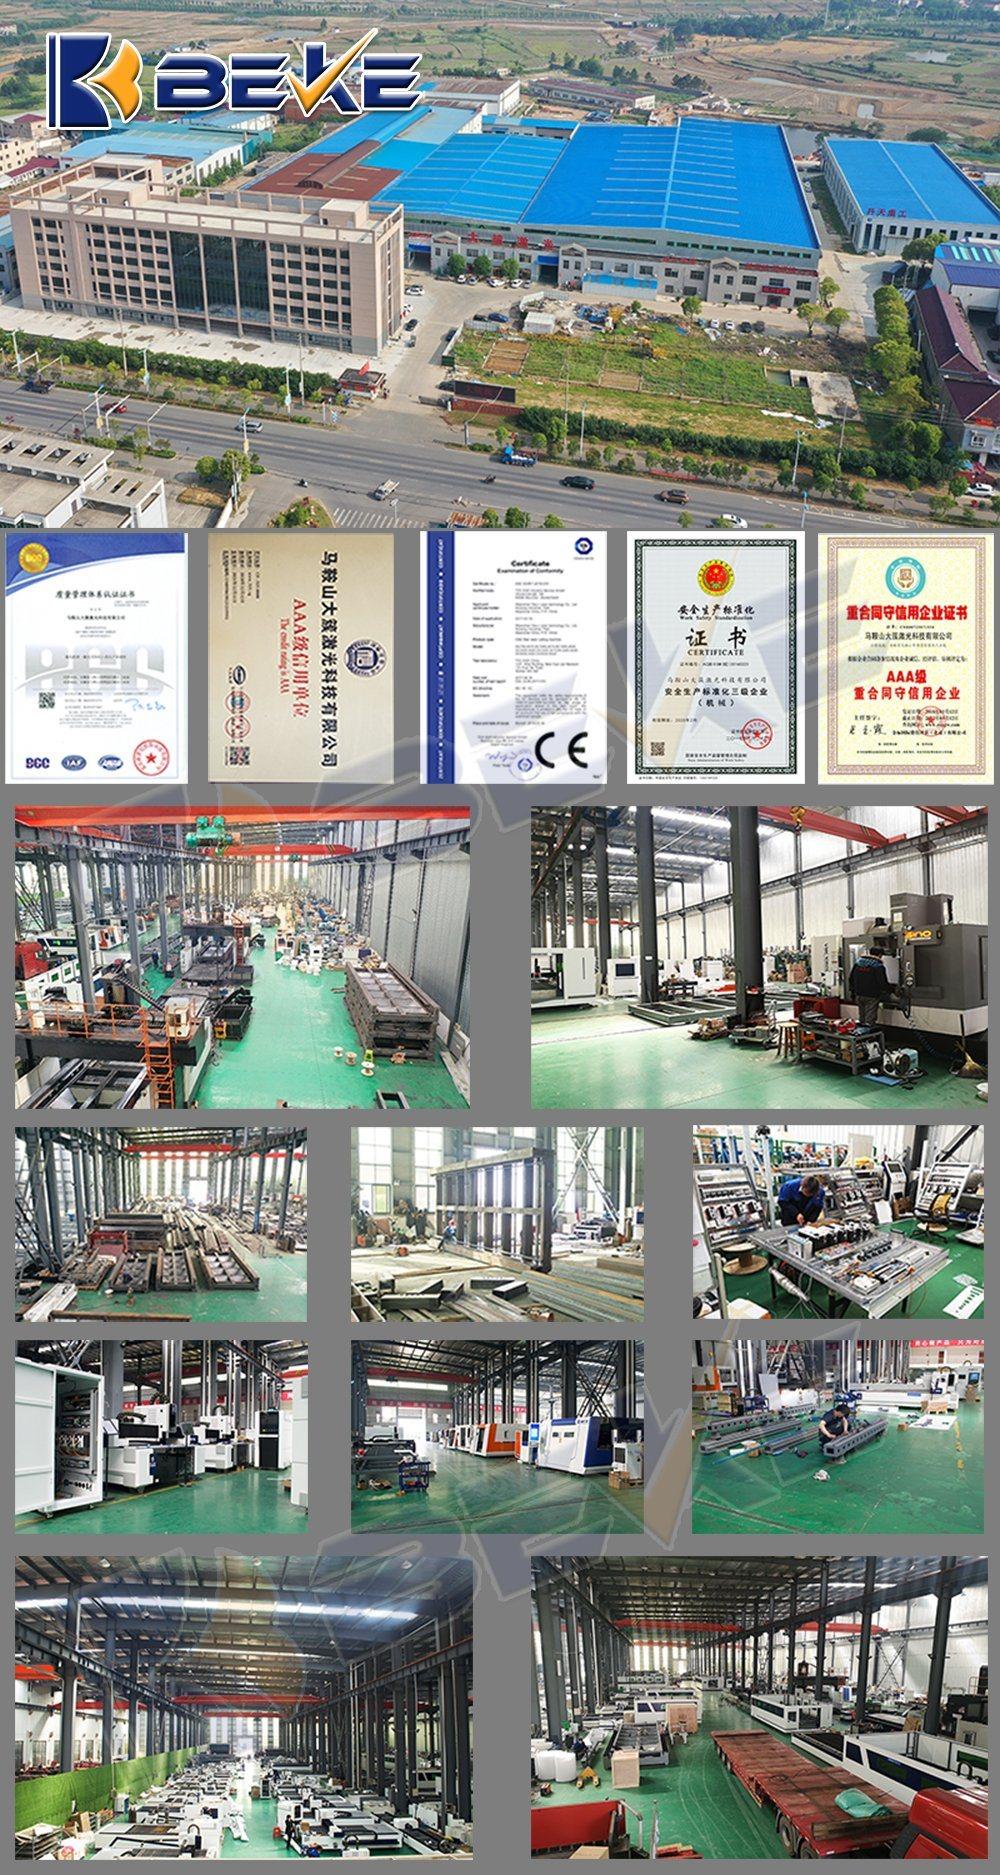 Nanjing Beke High Performance Bk3015 2000W High Precision Iron Plate CNC Fiber Laser Cutting Machine